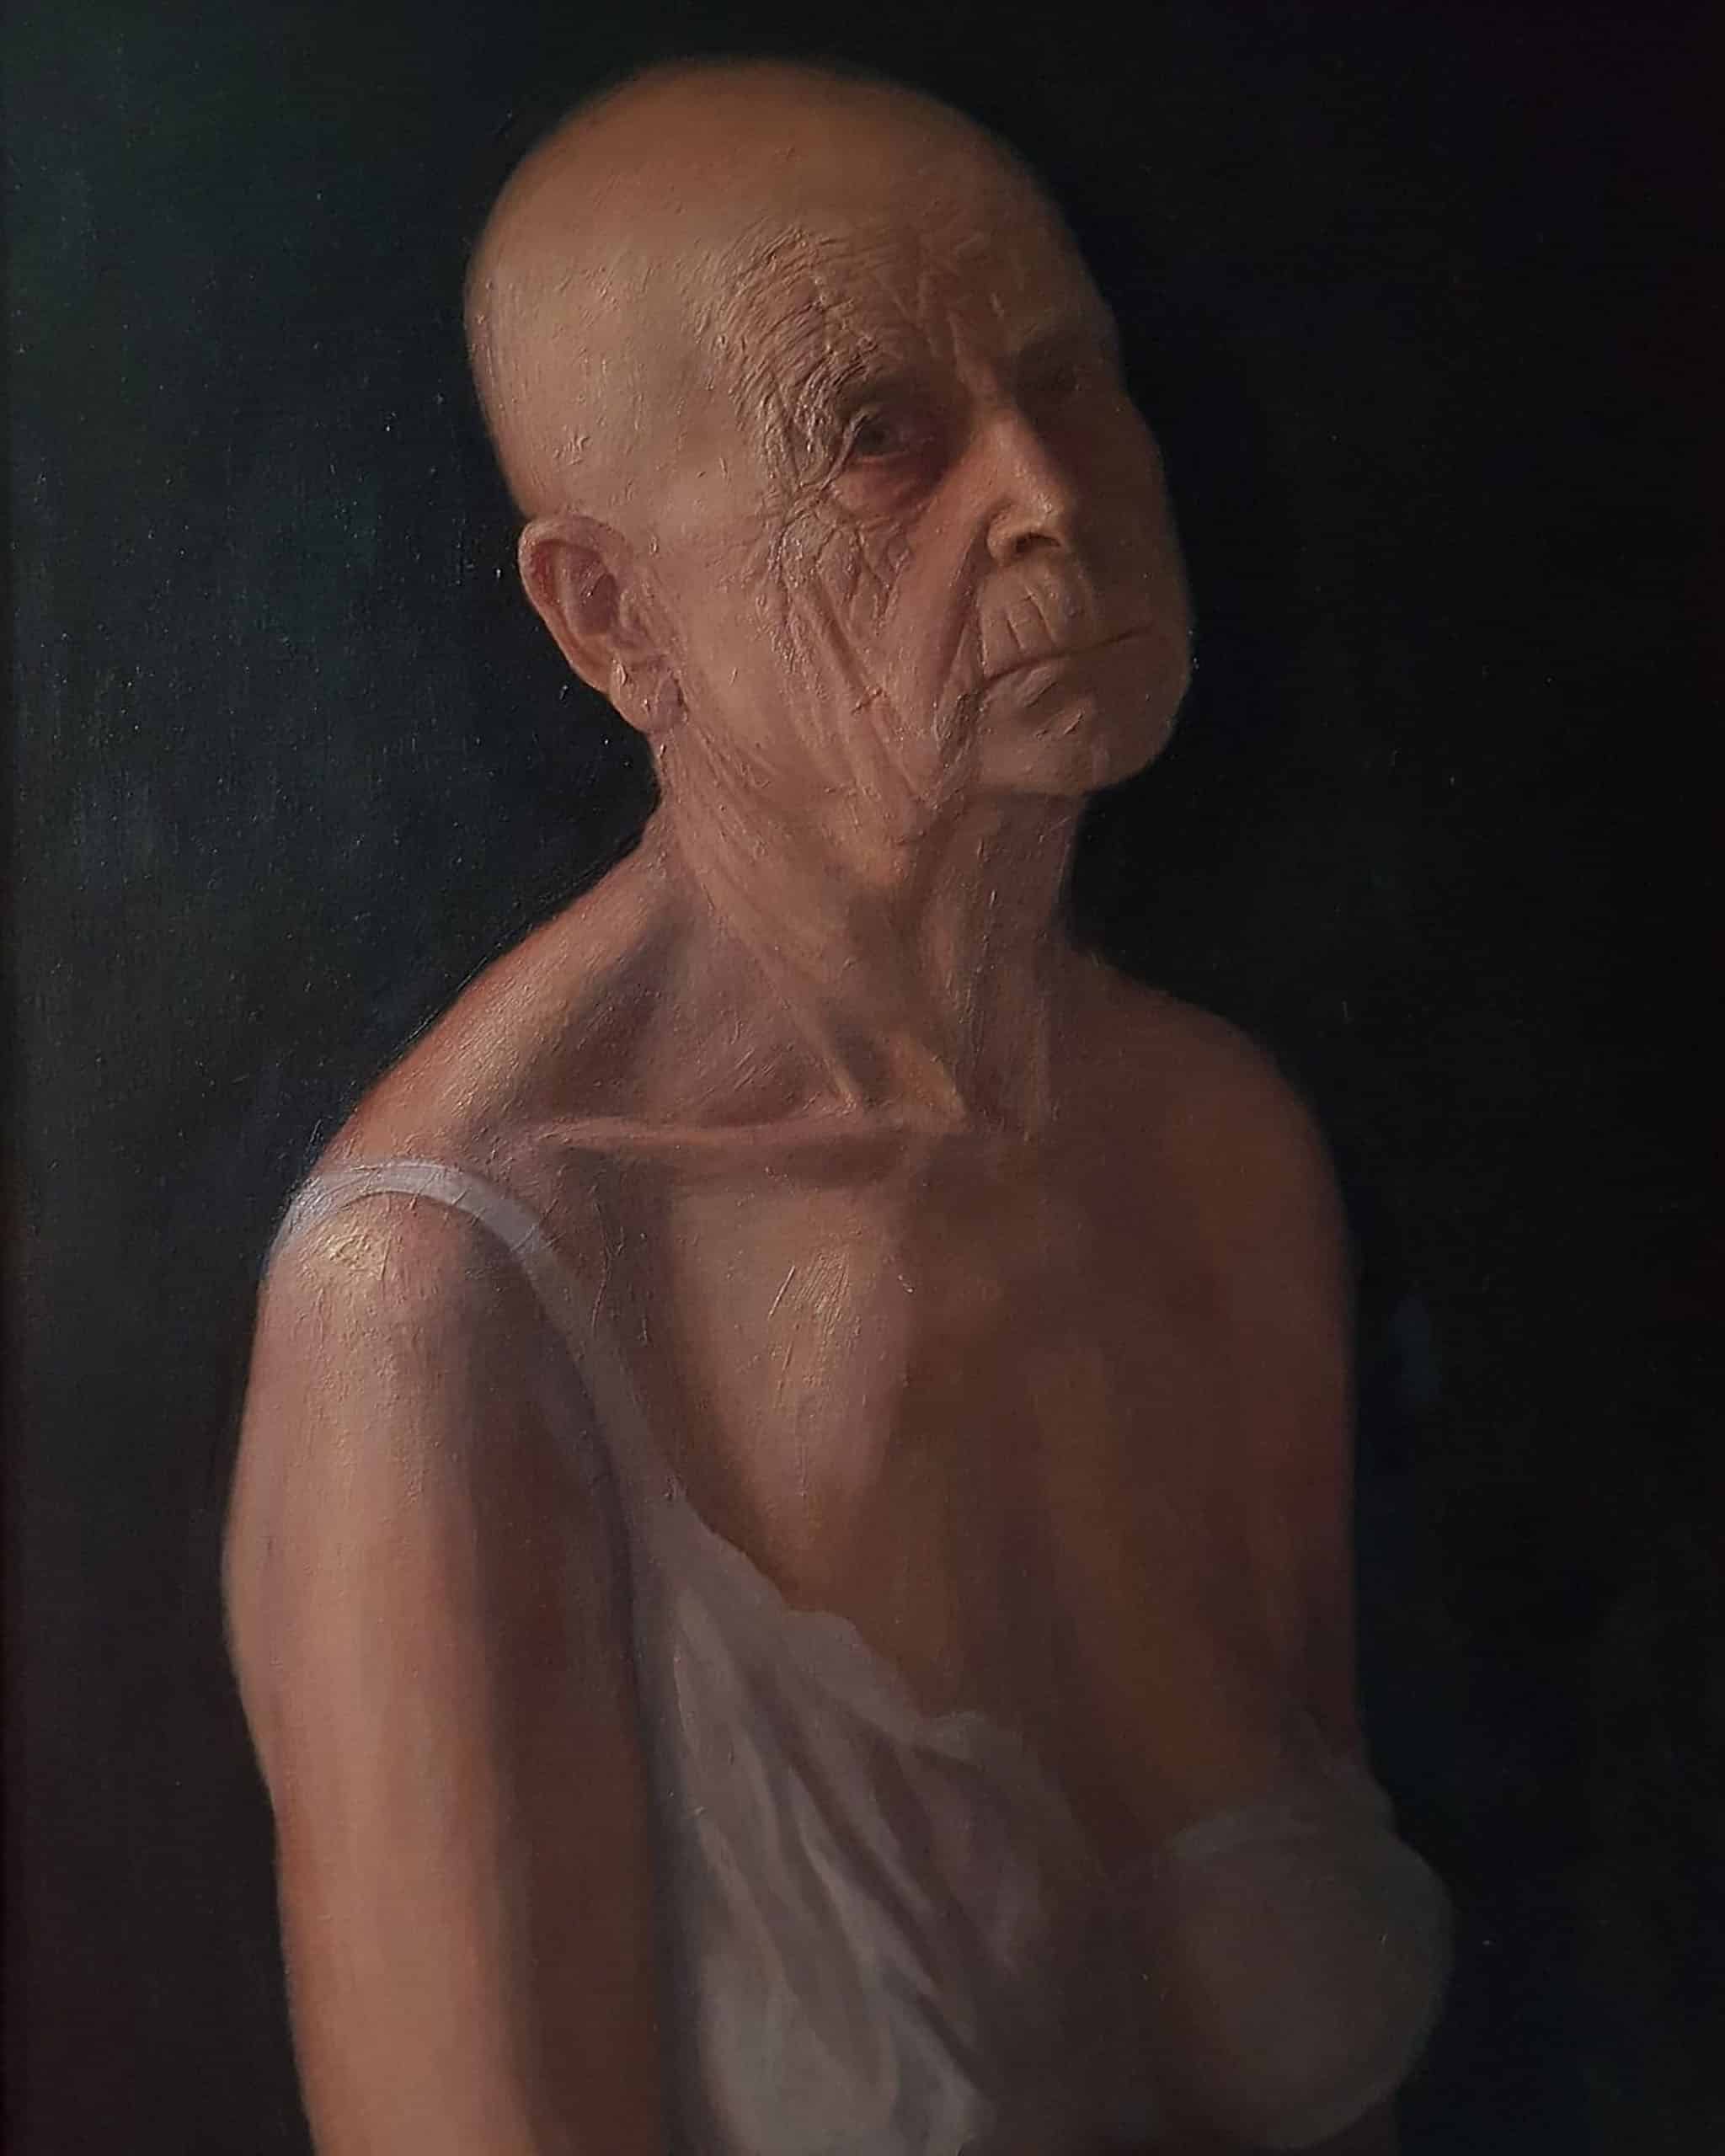 Farigh Ghaderi, "Traces", Oil on canvas, 50 x 70 cm, 2019